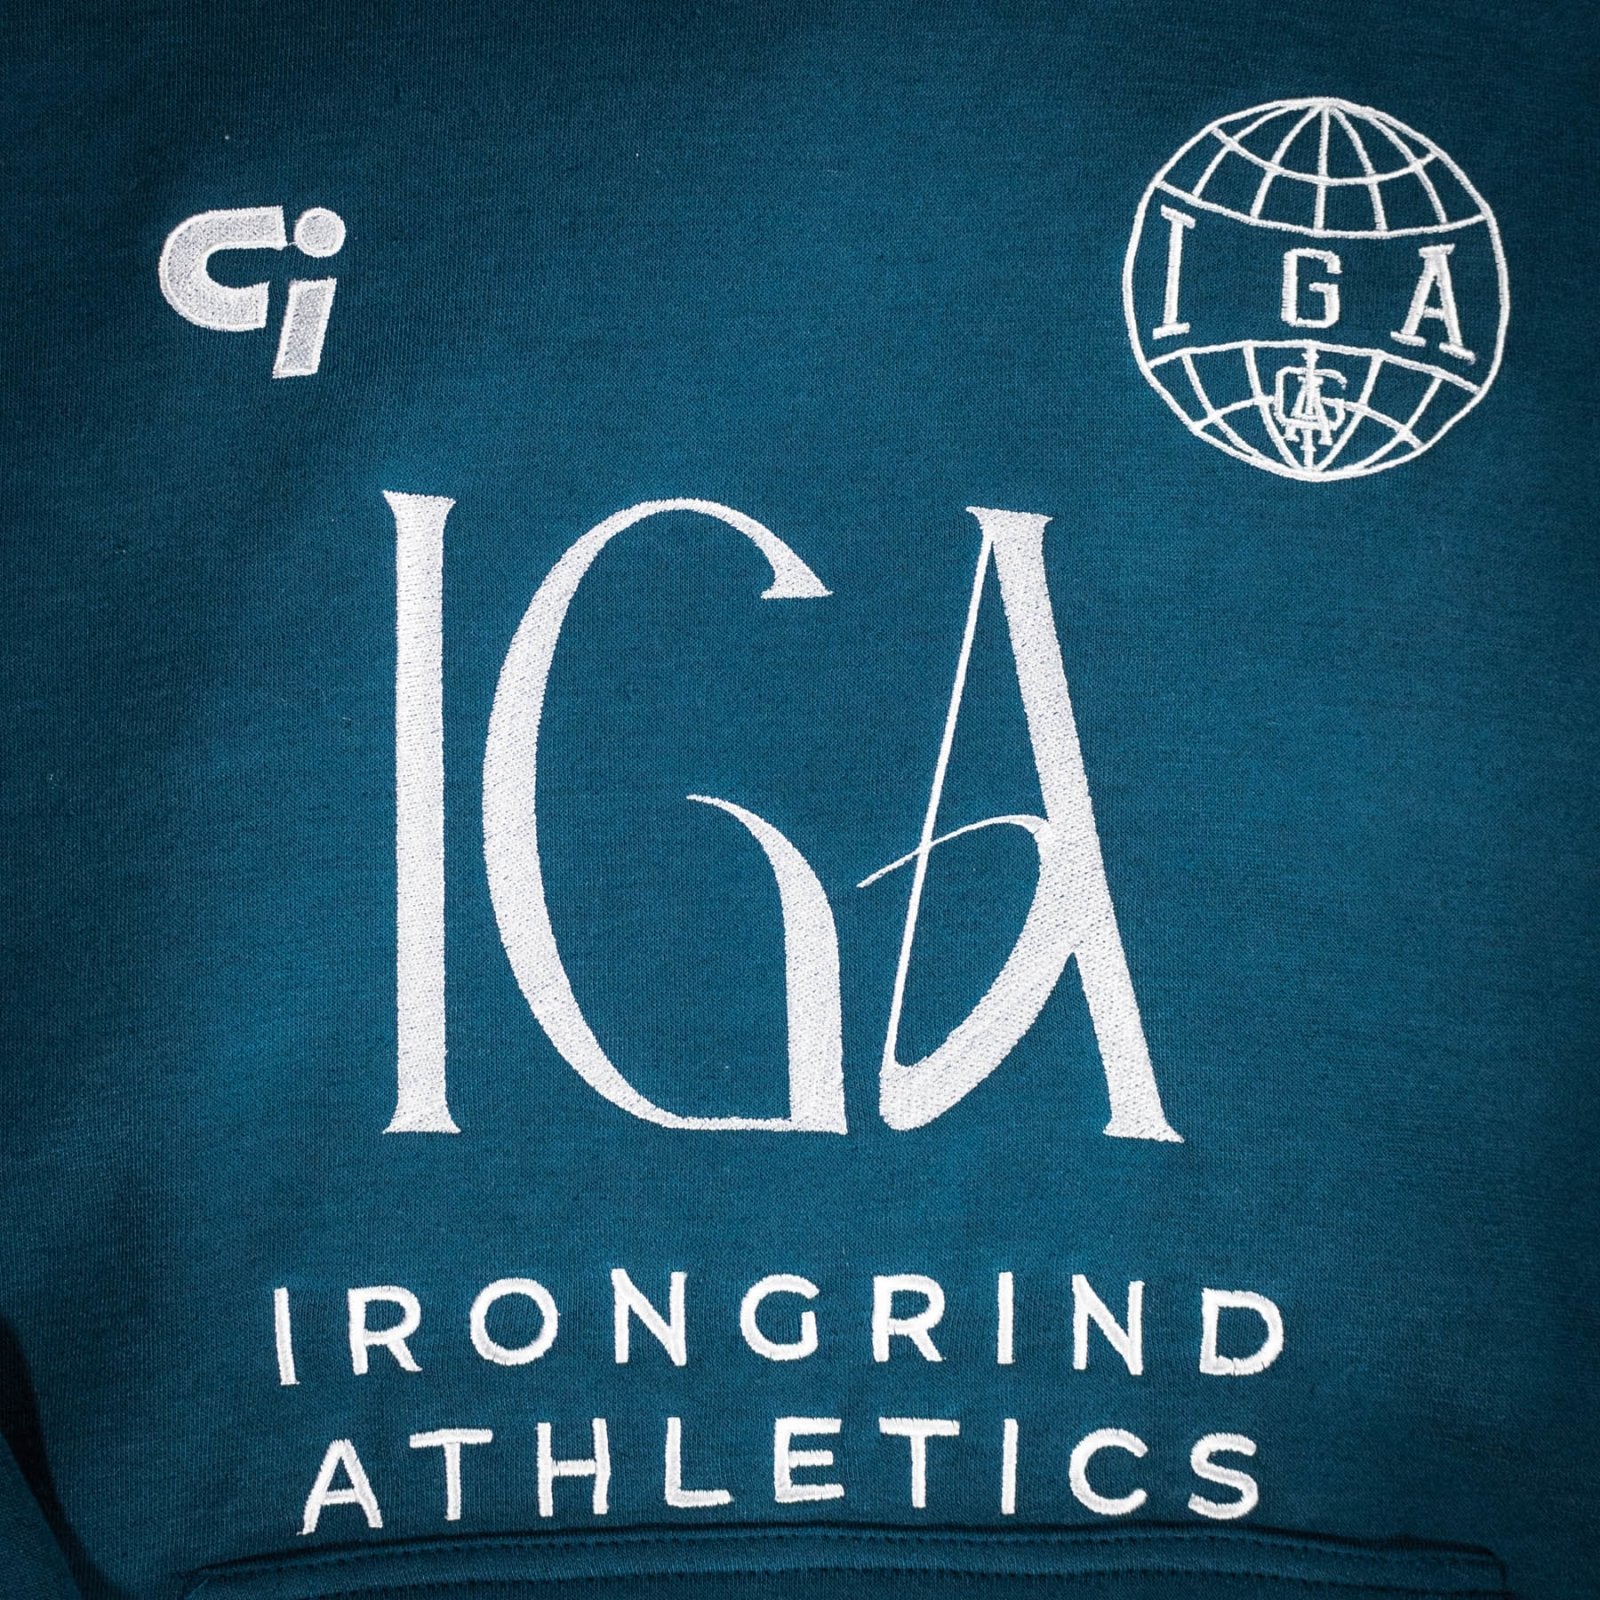 Prevail 'IGA' Raglan Embroidered Hoodie - IronGrind Athletics - activewear - gymshark - alphalete